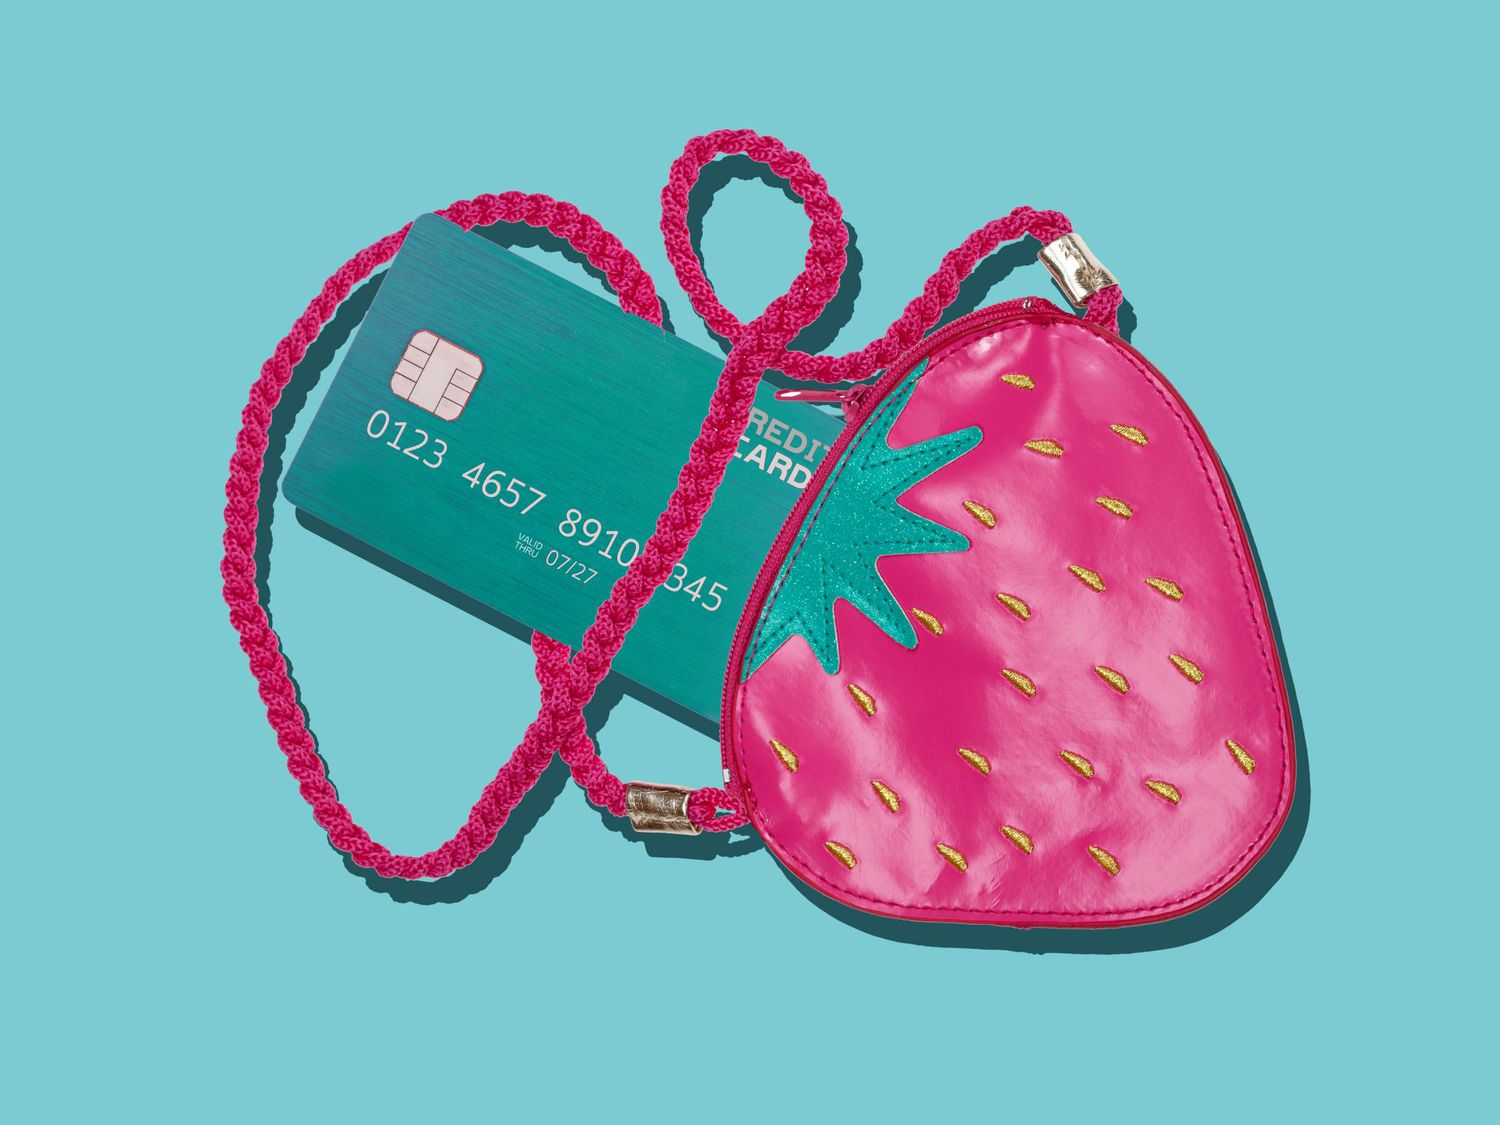 teach-kids-credit: credit card and strawberry handbag